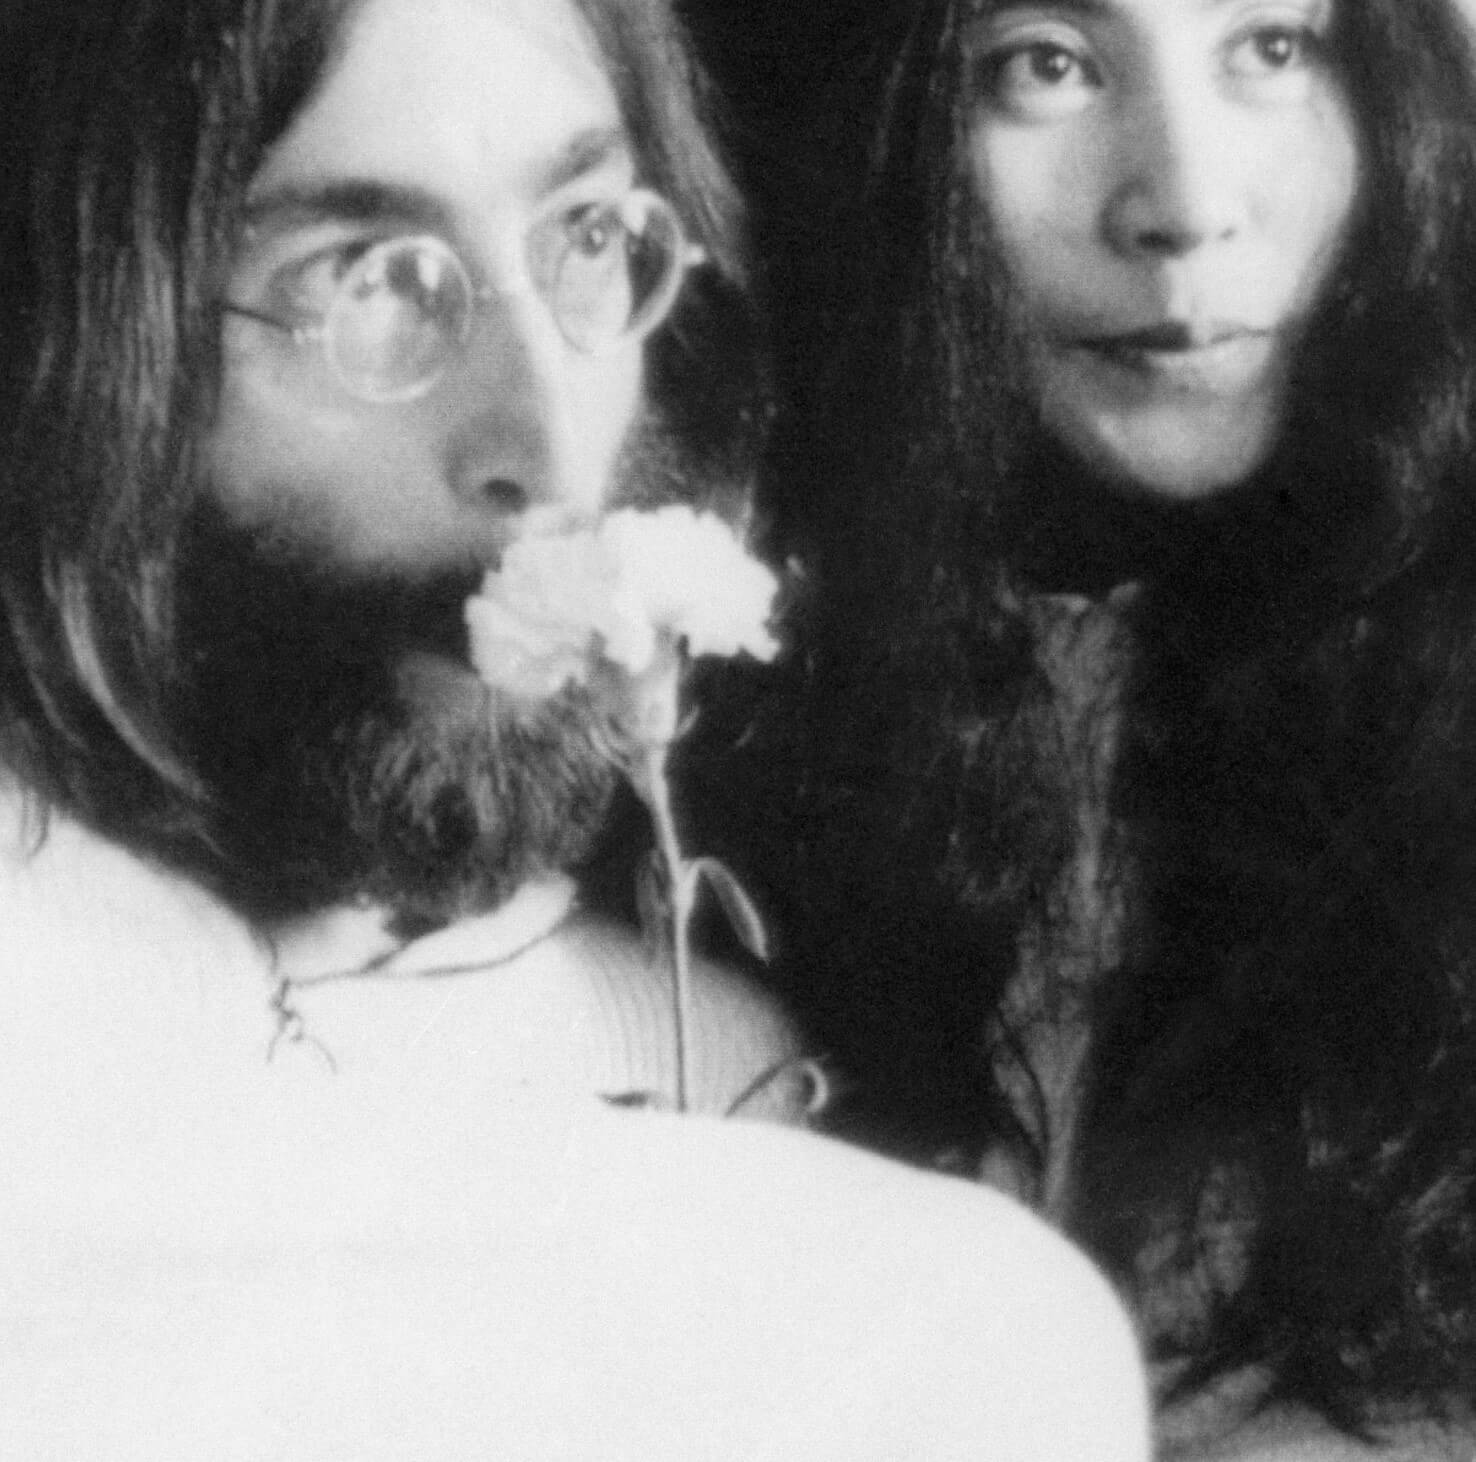 "Give Peace a Chance" singer John Lennon with Yoko Ono